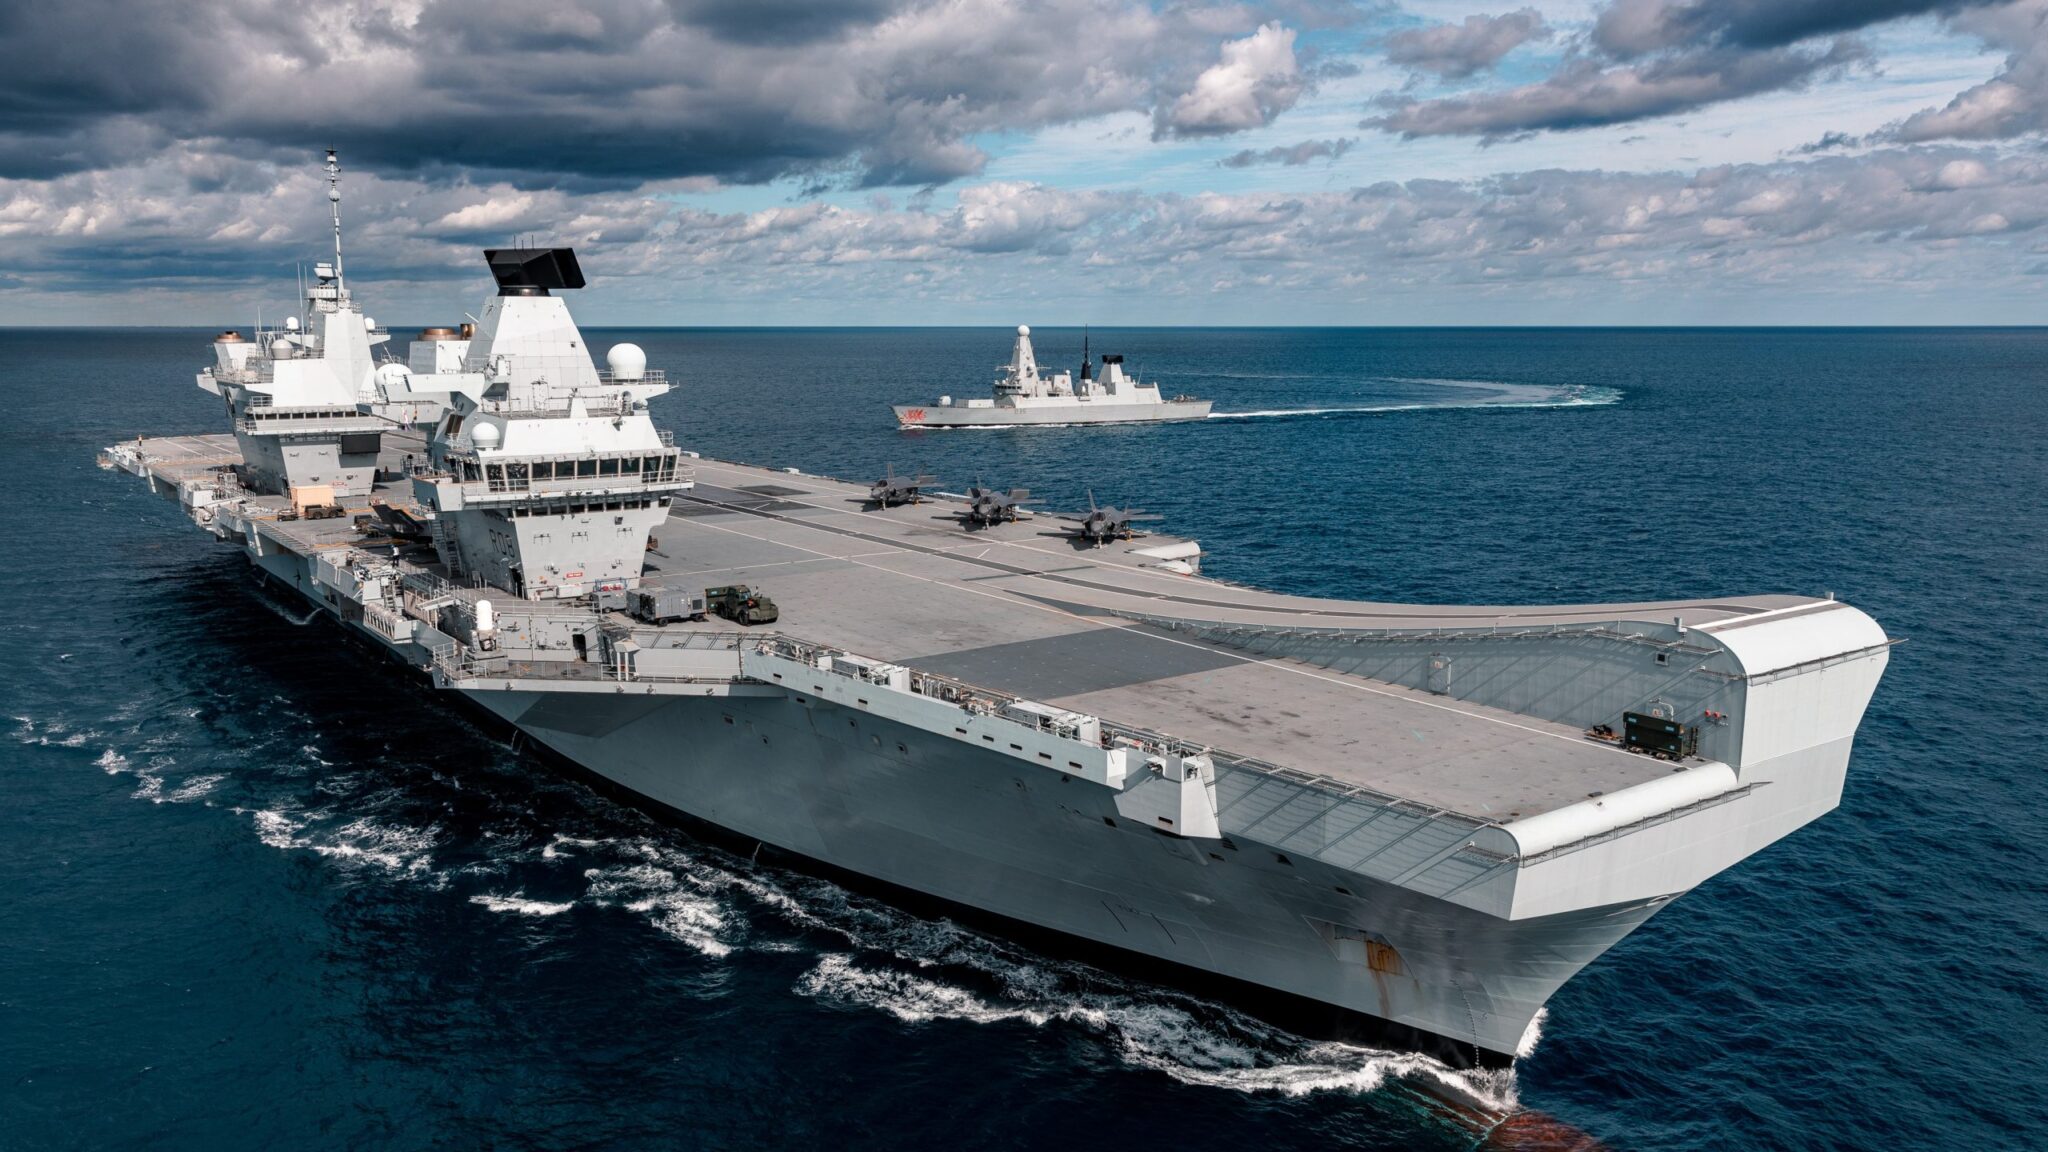 HMS Queen Elizabeth strike group entered into Mediterranean Sea